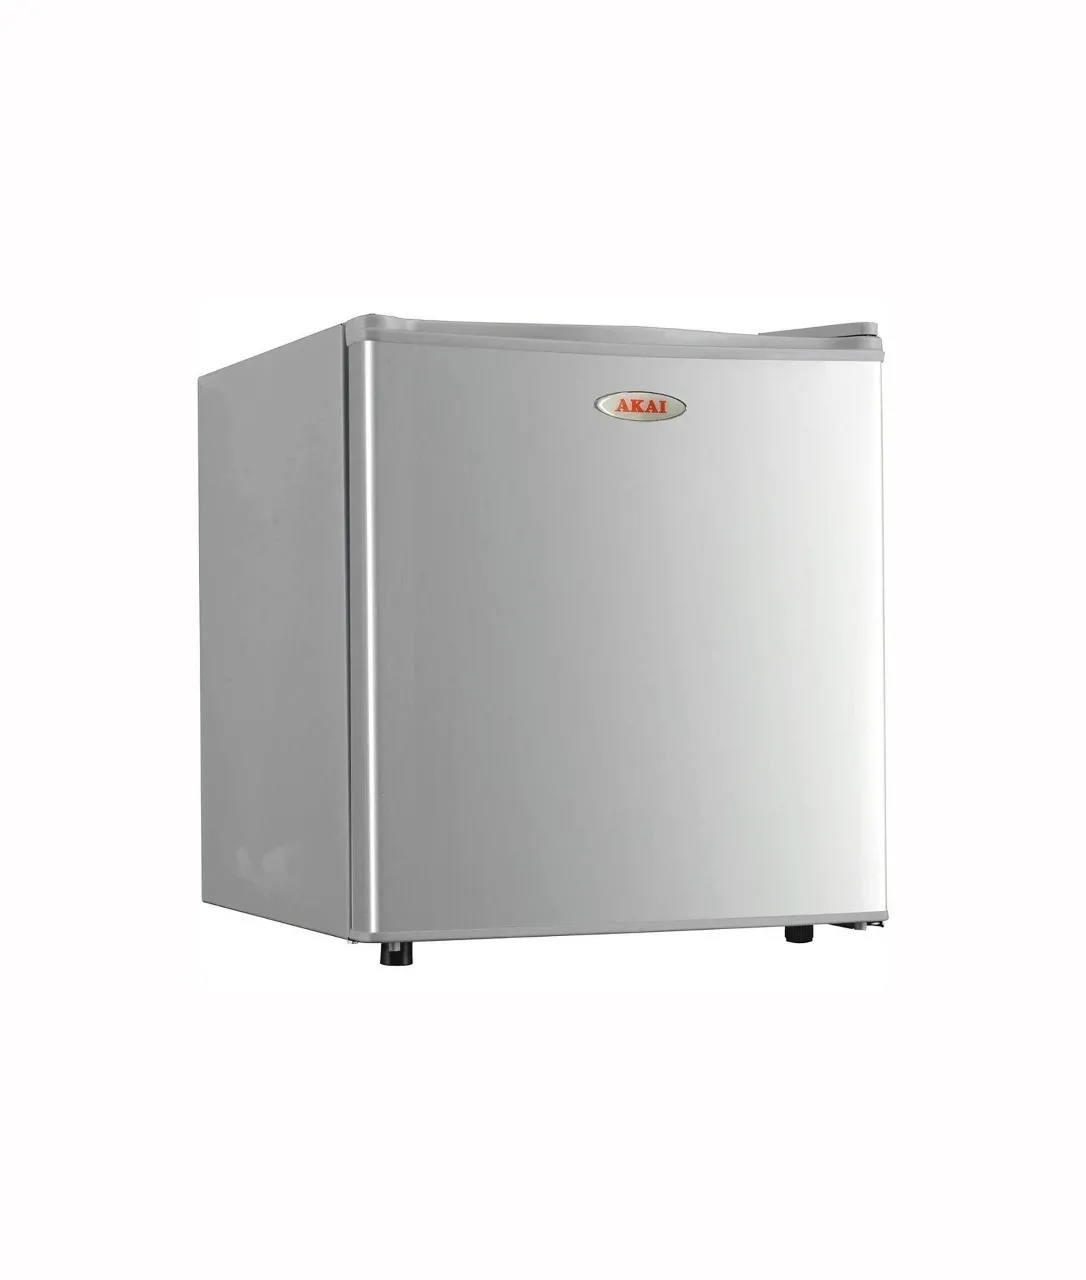 Akai 60 Liter Single Door Refrigerator Color Silver Model – RFMA-K60DS6 – 1 Year Full 5 Year Compressor Warranty.